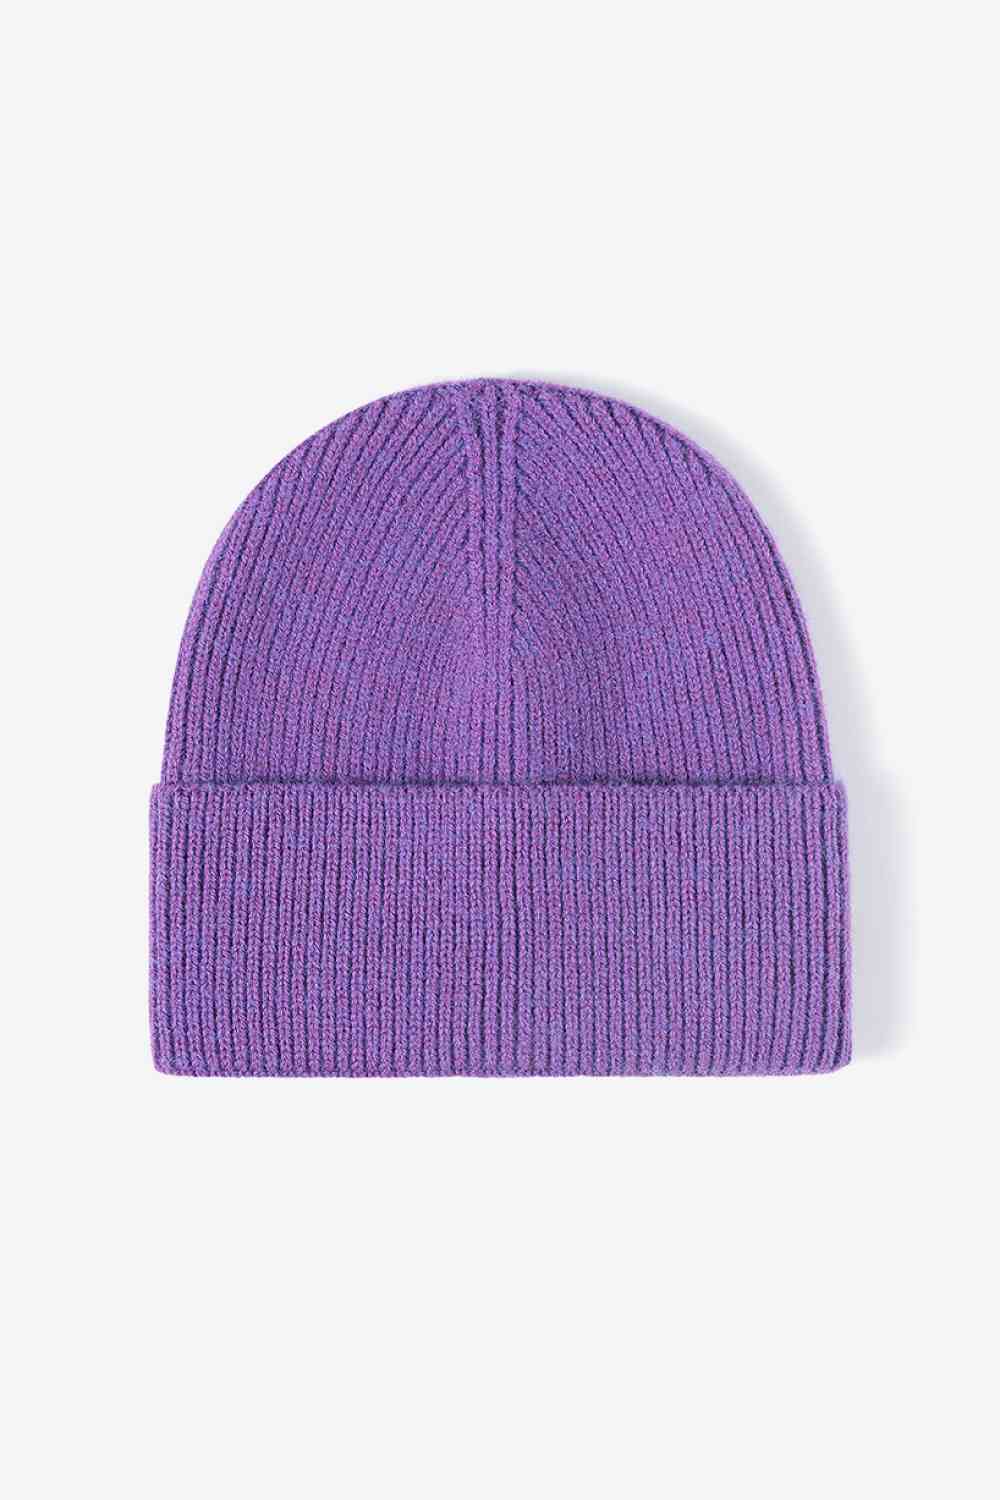 Warm In Chilly Days Knit Beanie Purple One Size